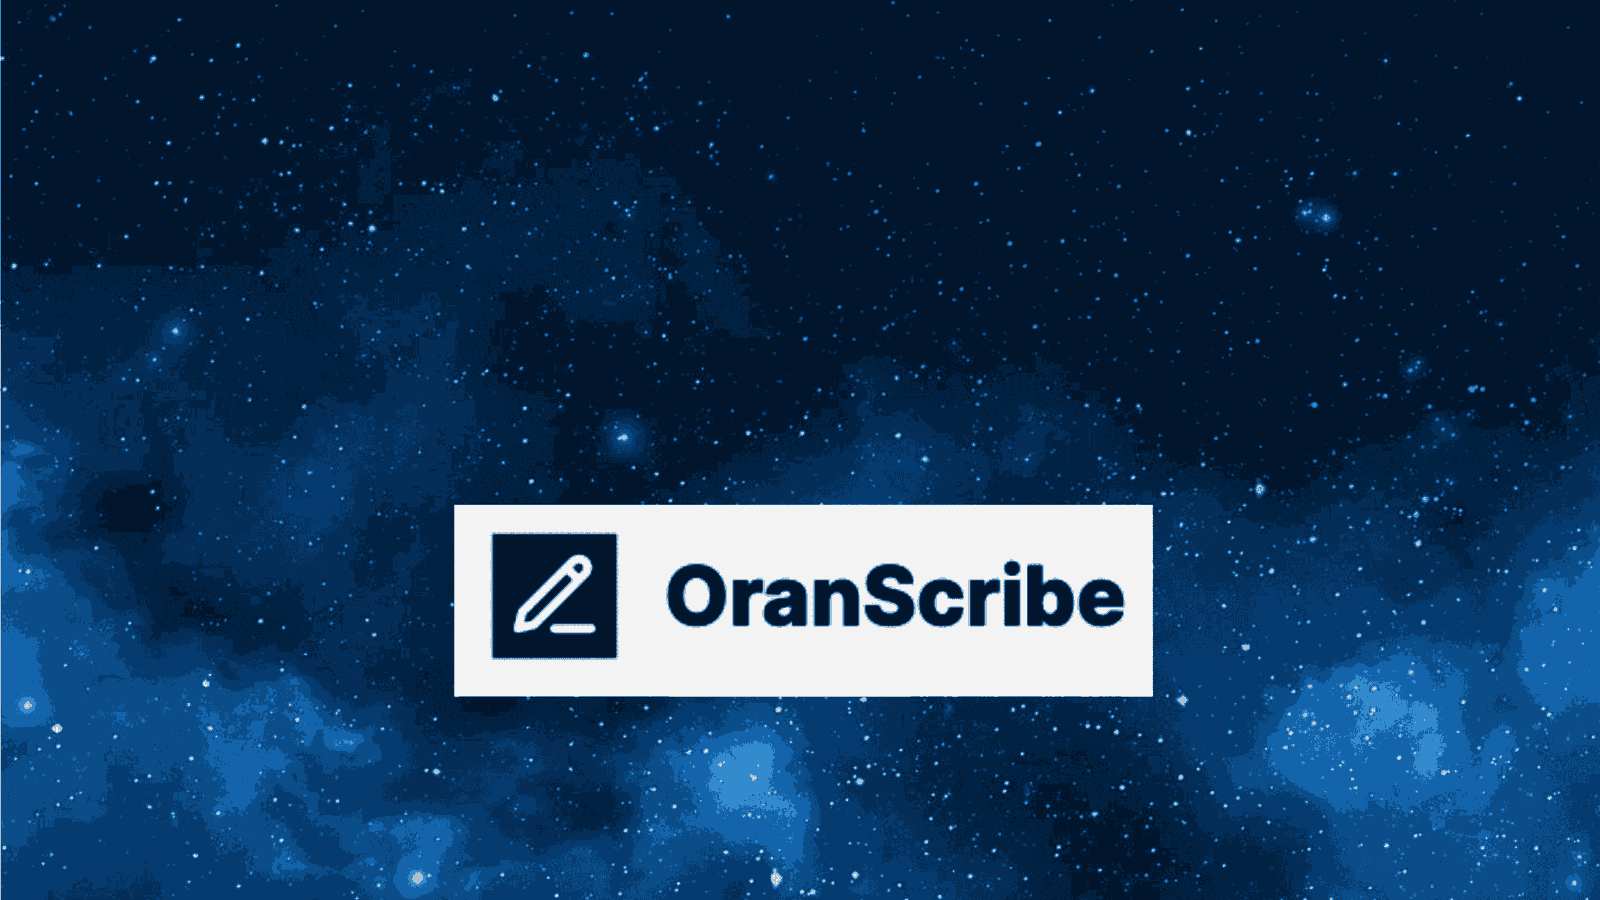 OranScribe teaser